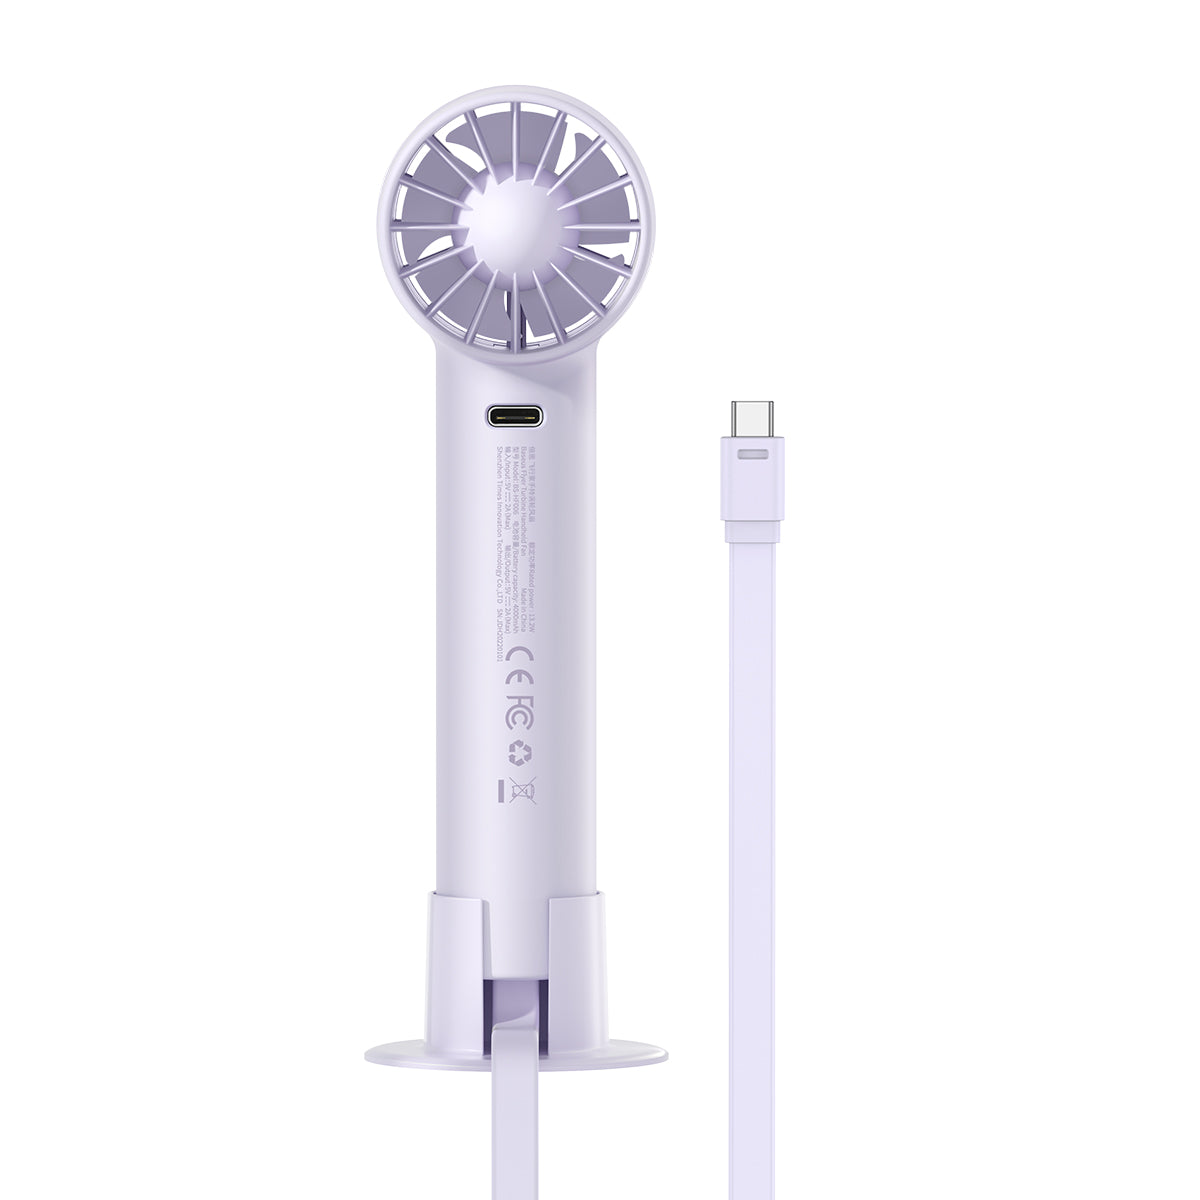 Baseus mini fan power bank with built-in USB Type C cable 4000mAh purple (ACFX010105)